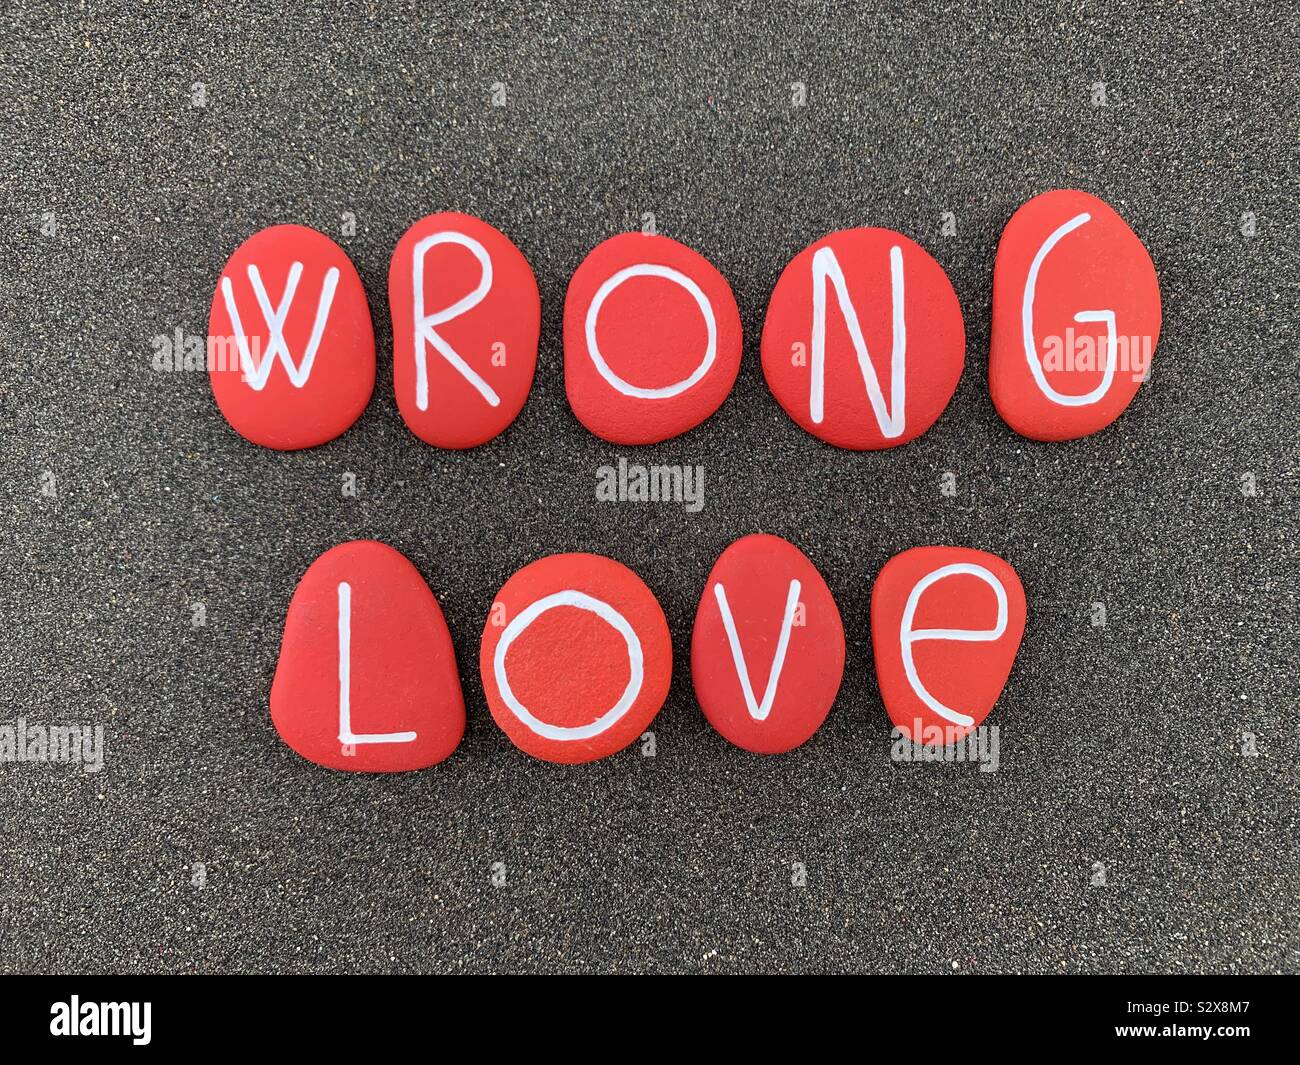 Wrong love Stock Photo